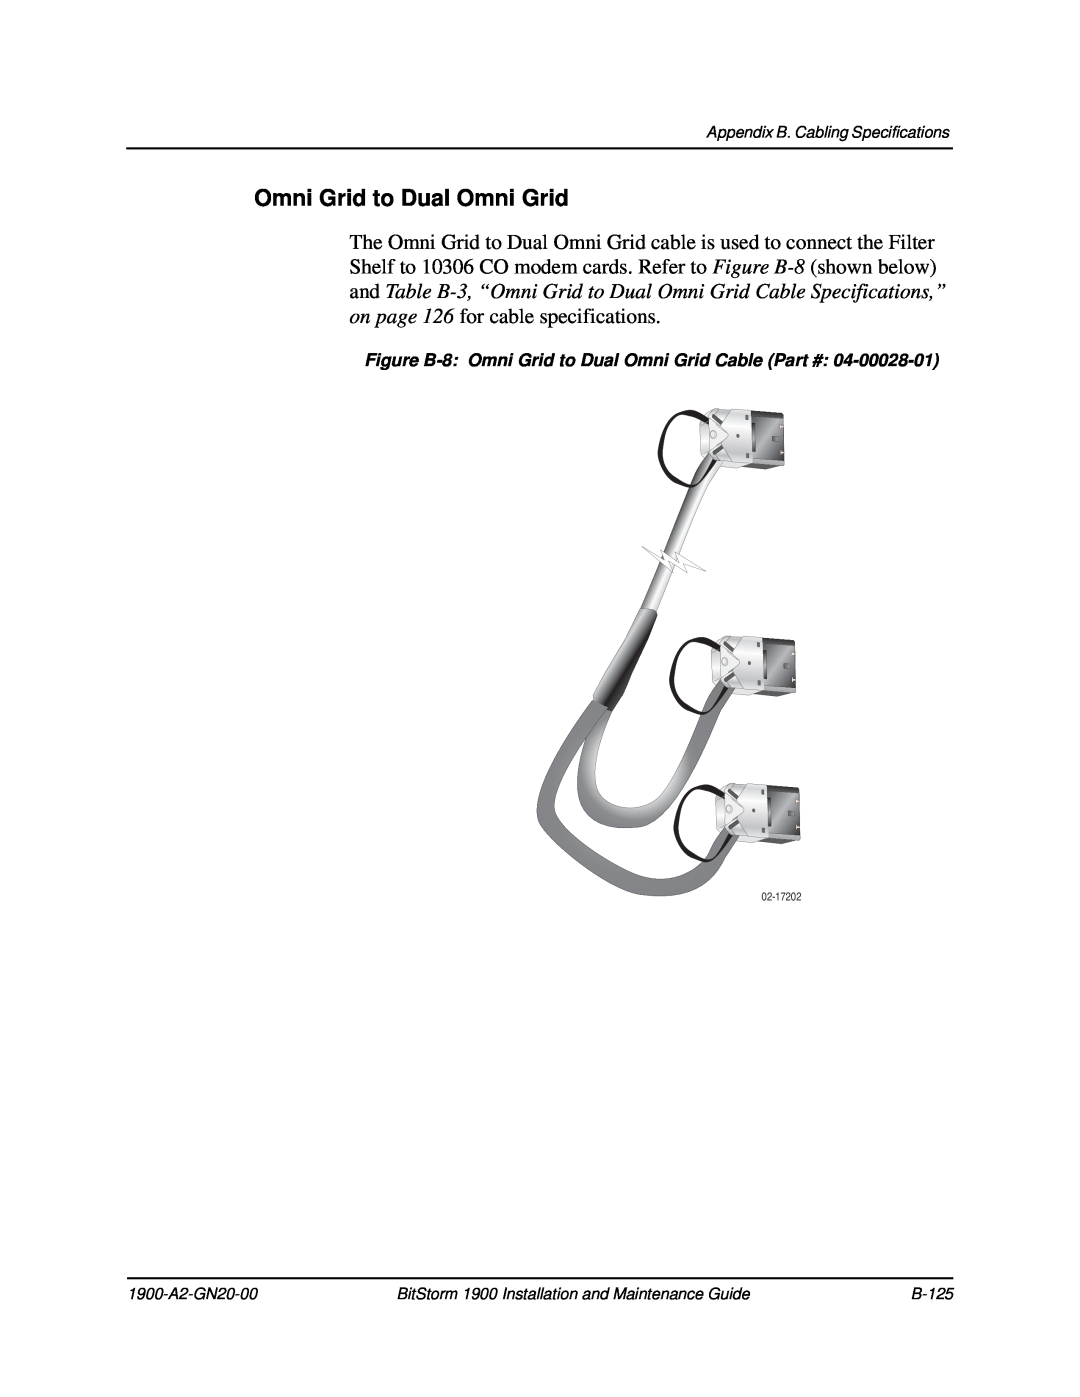 Paradyne 1900 manual Figure B-8 Omni Grid to Dual Omni Grid Cable 